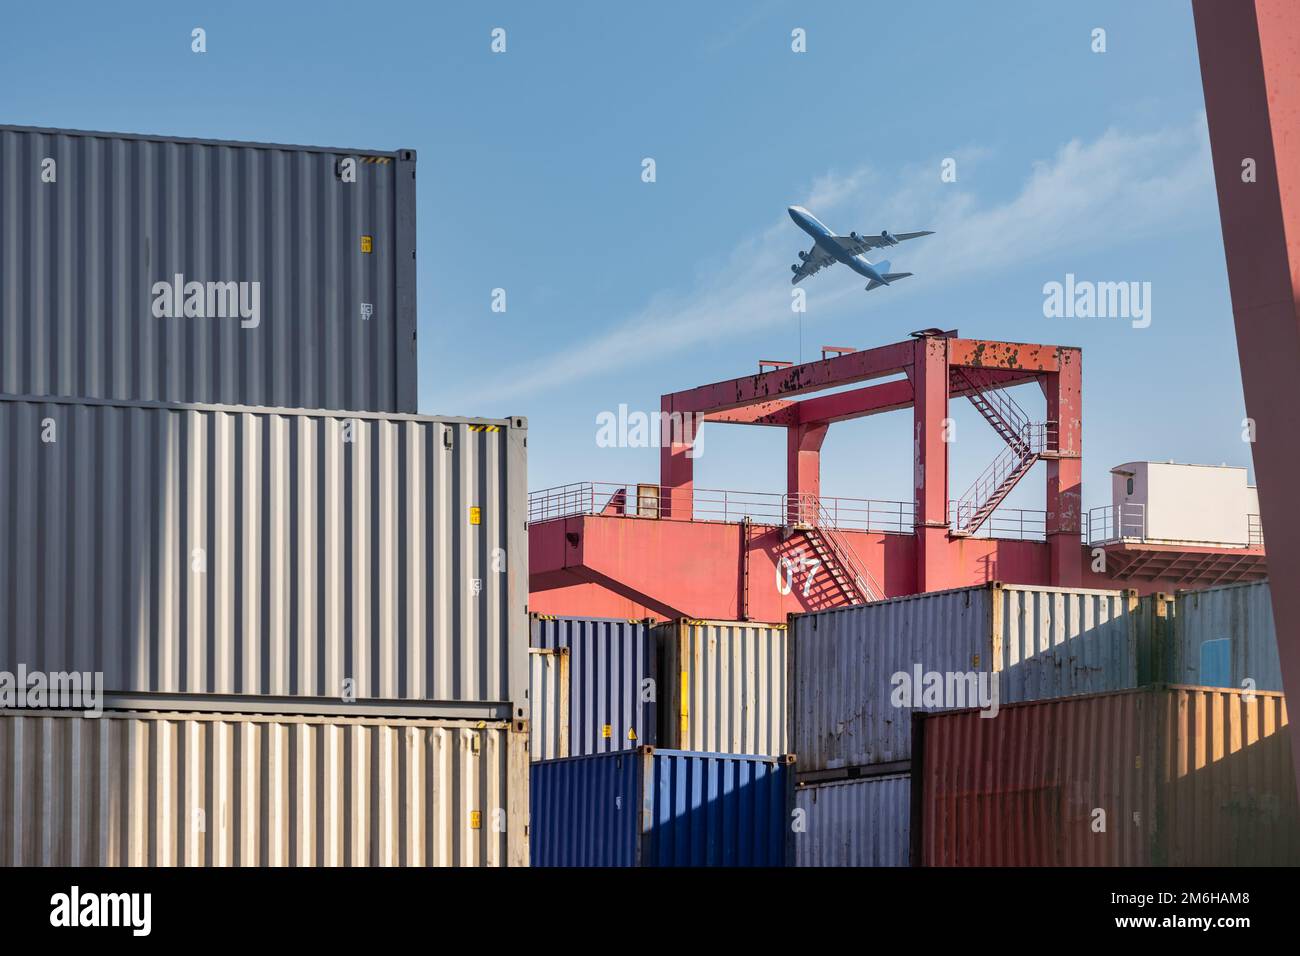 Containerhof-Nahaufnahme mit Flugzeug am Himmel Stockfoto